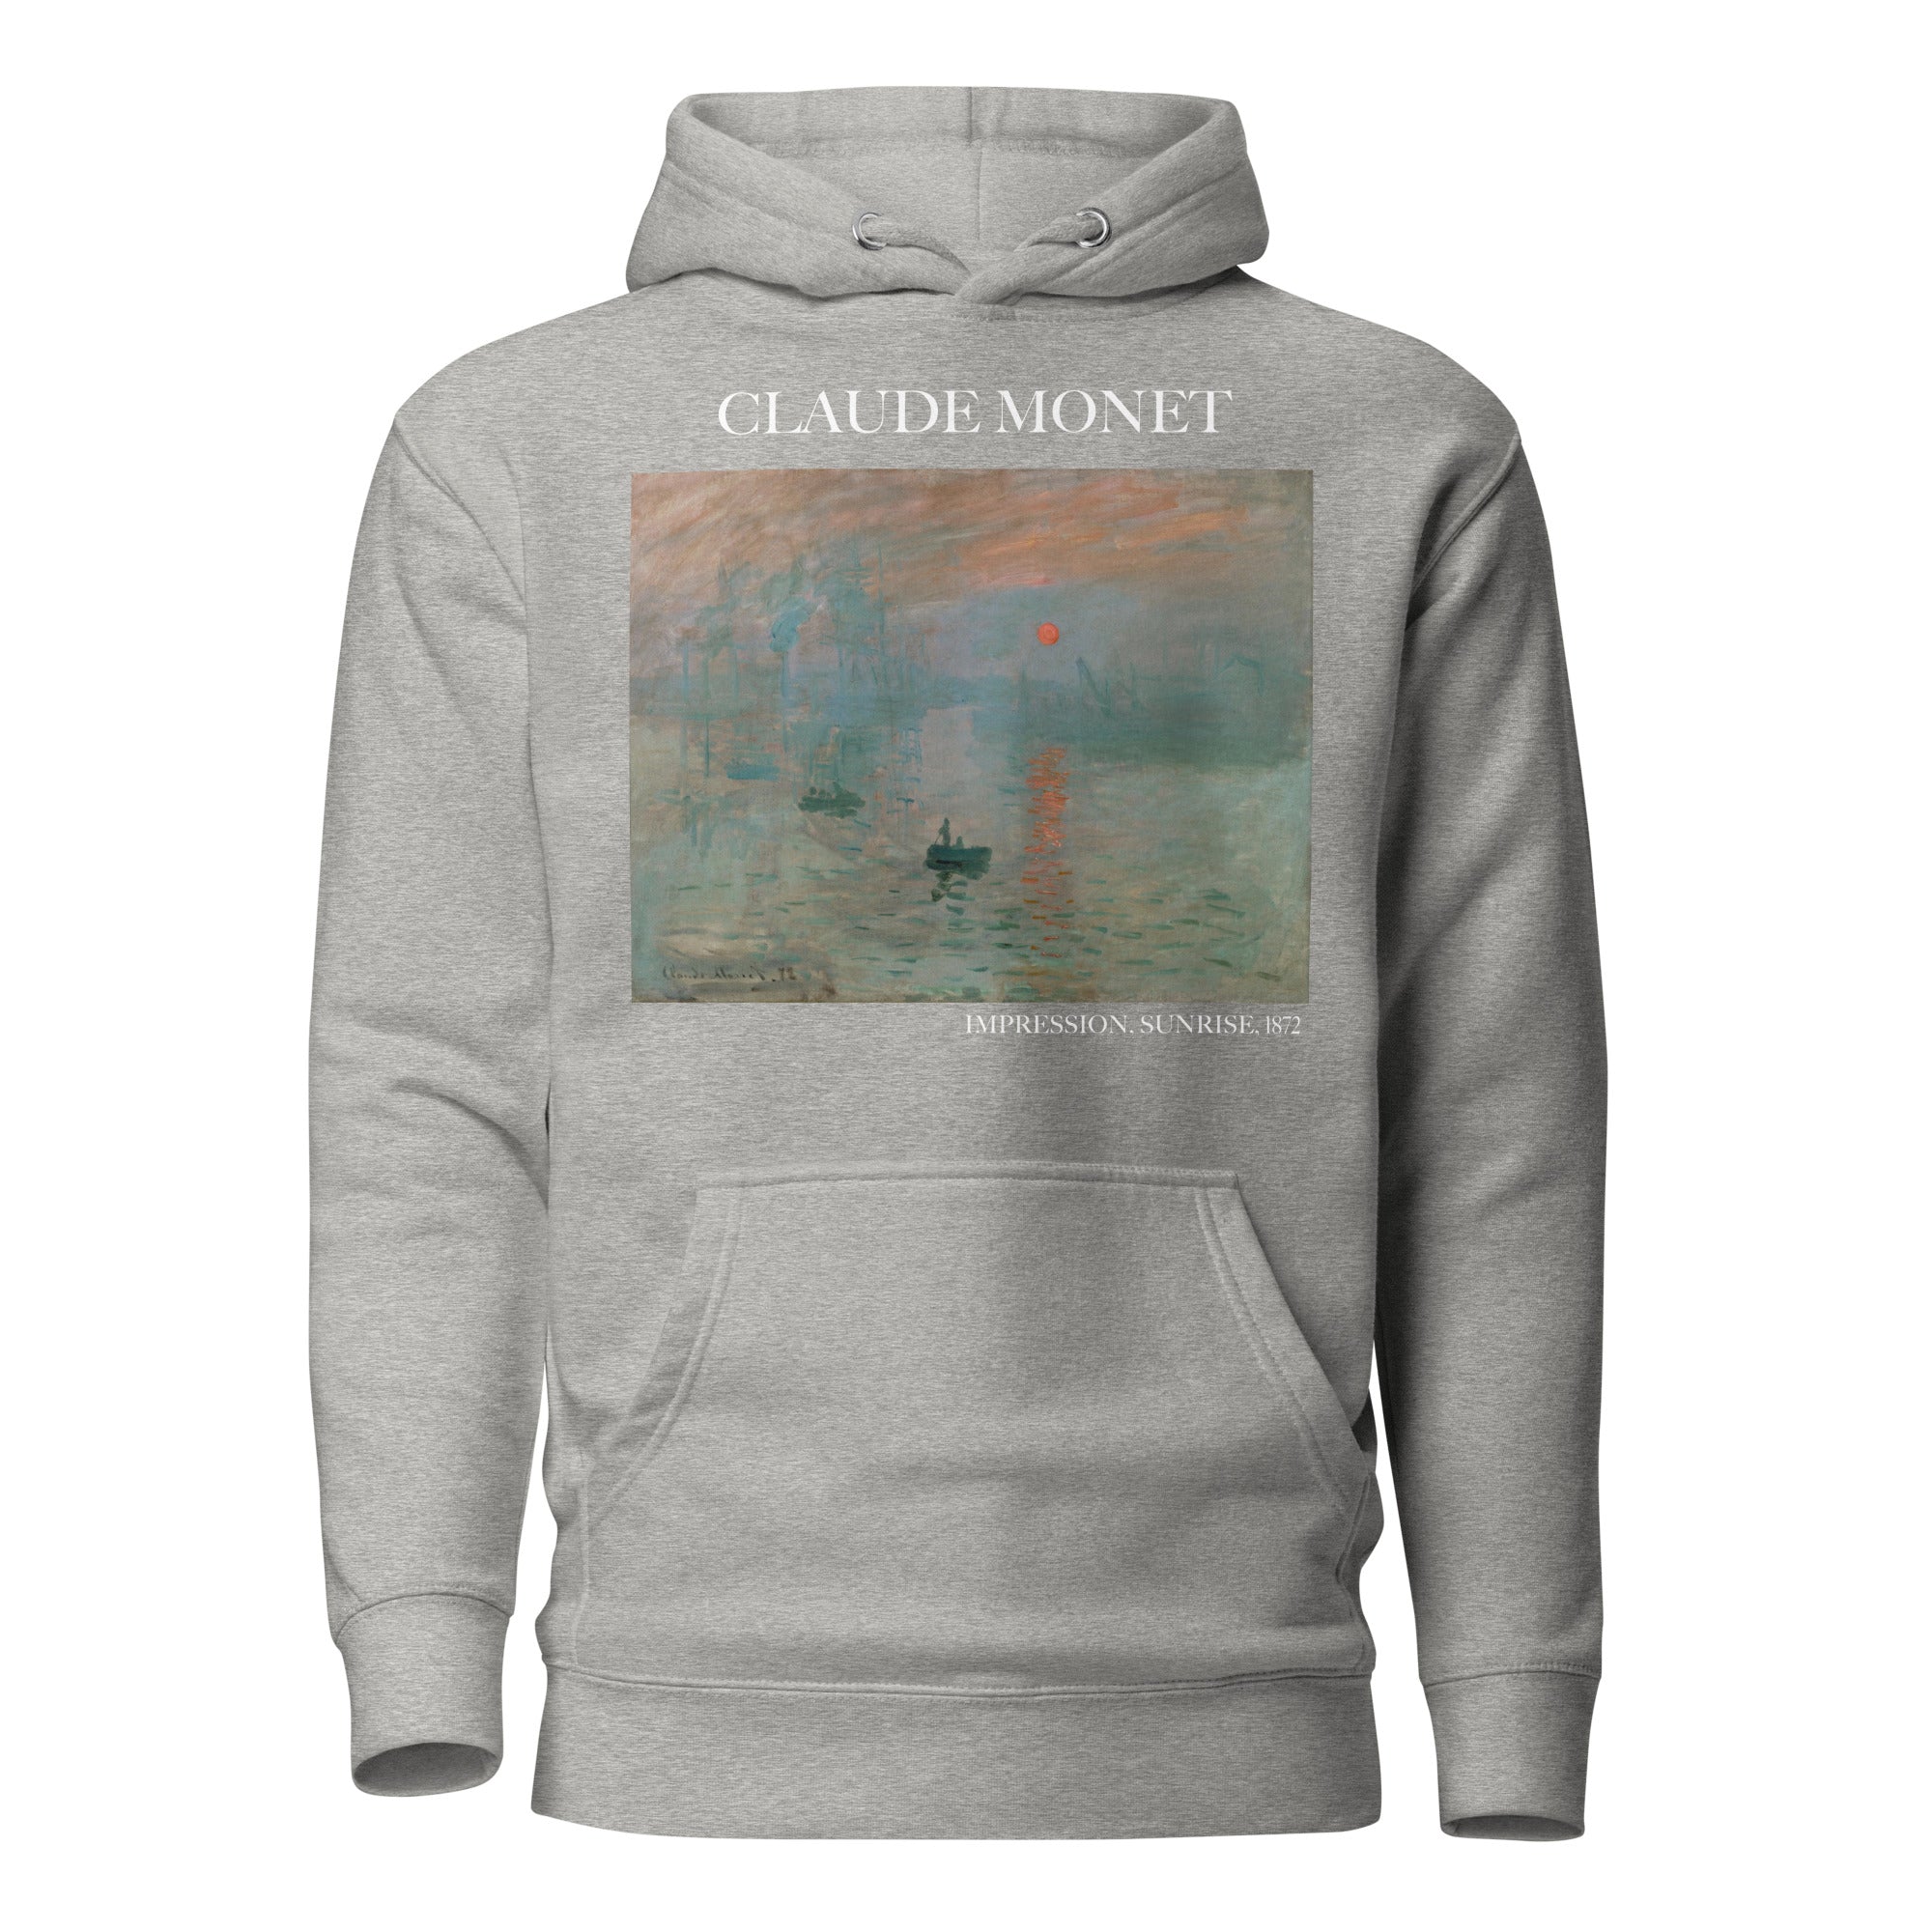 Claude Monet 'Impression, Sunrise' Famous Painting Hoodie | Unisex Premium Art Hoodie